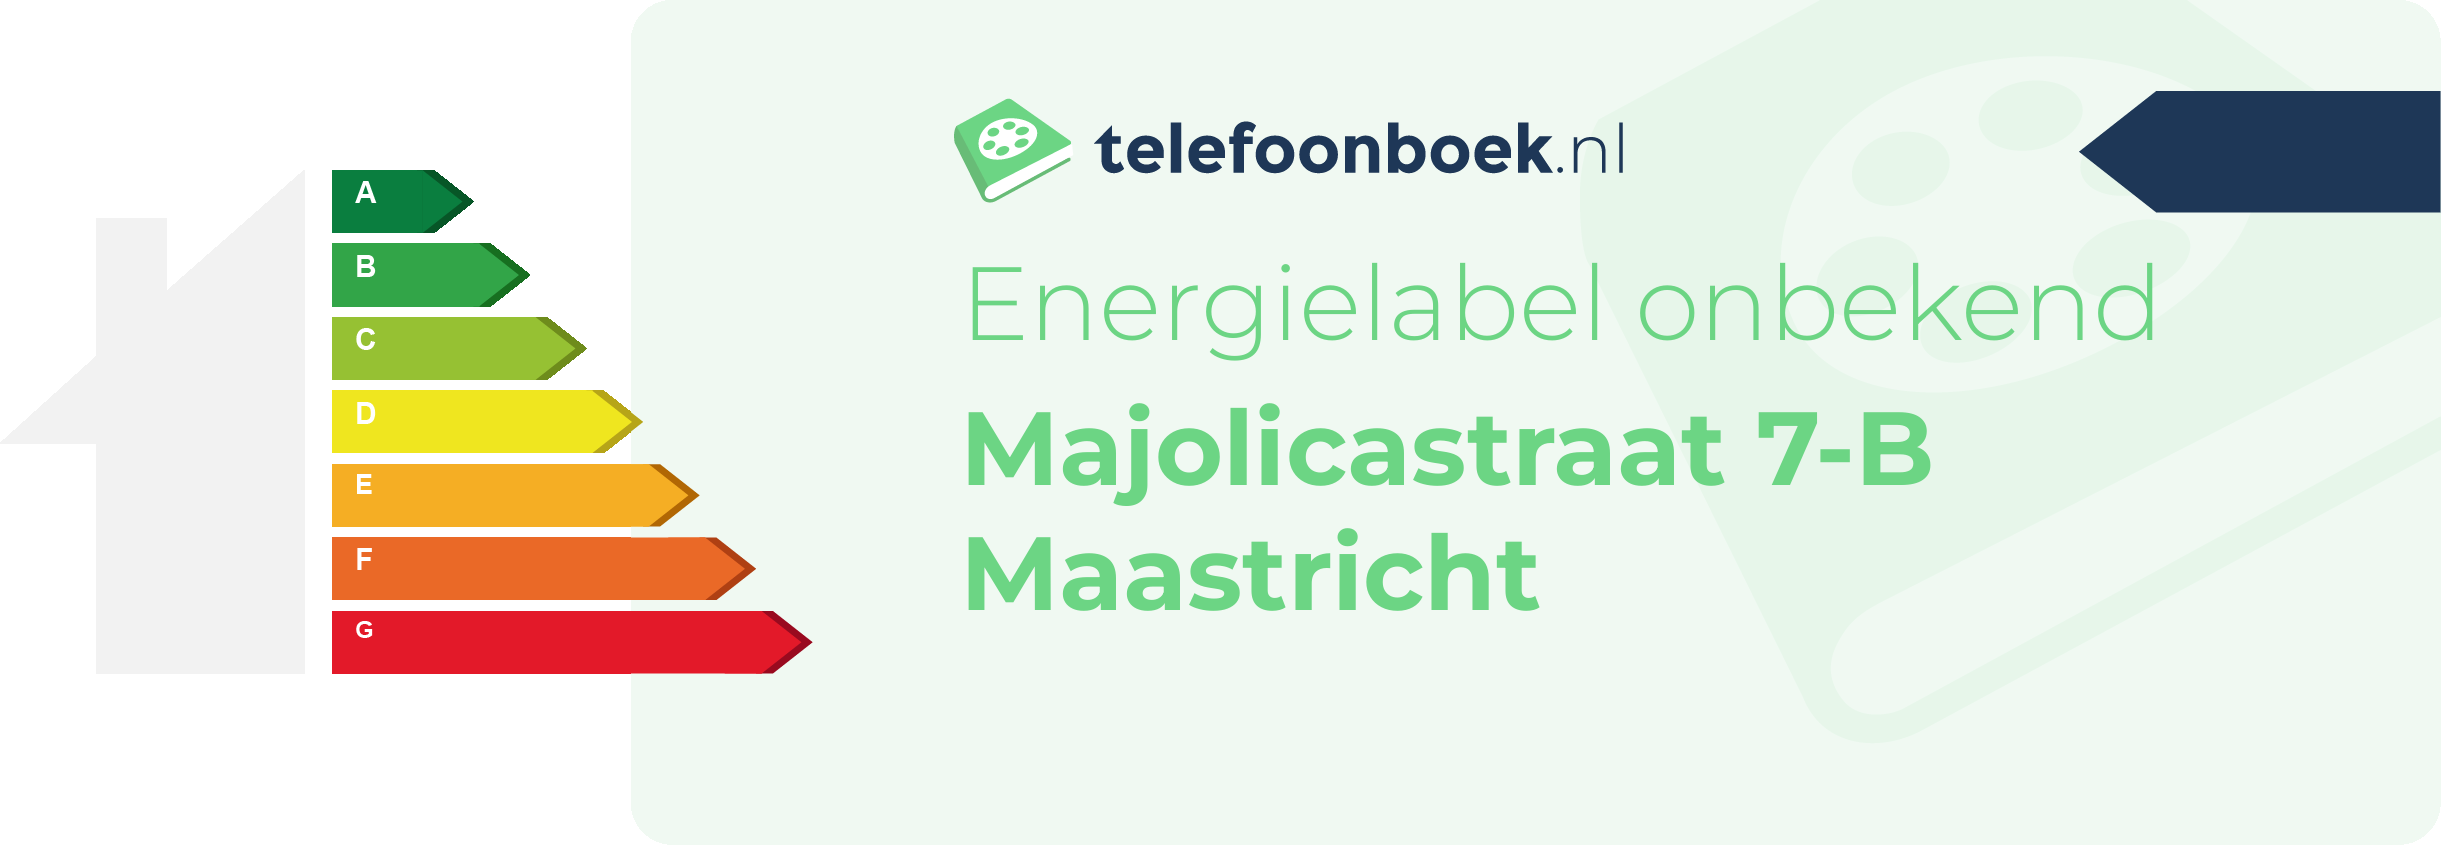 Energielabel Majolicastraat 7-B Maastricht